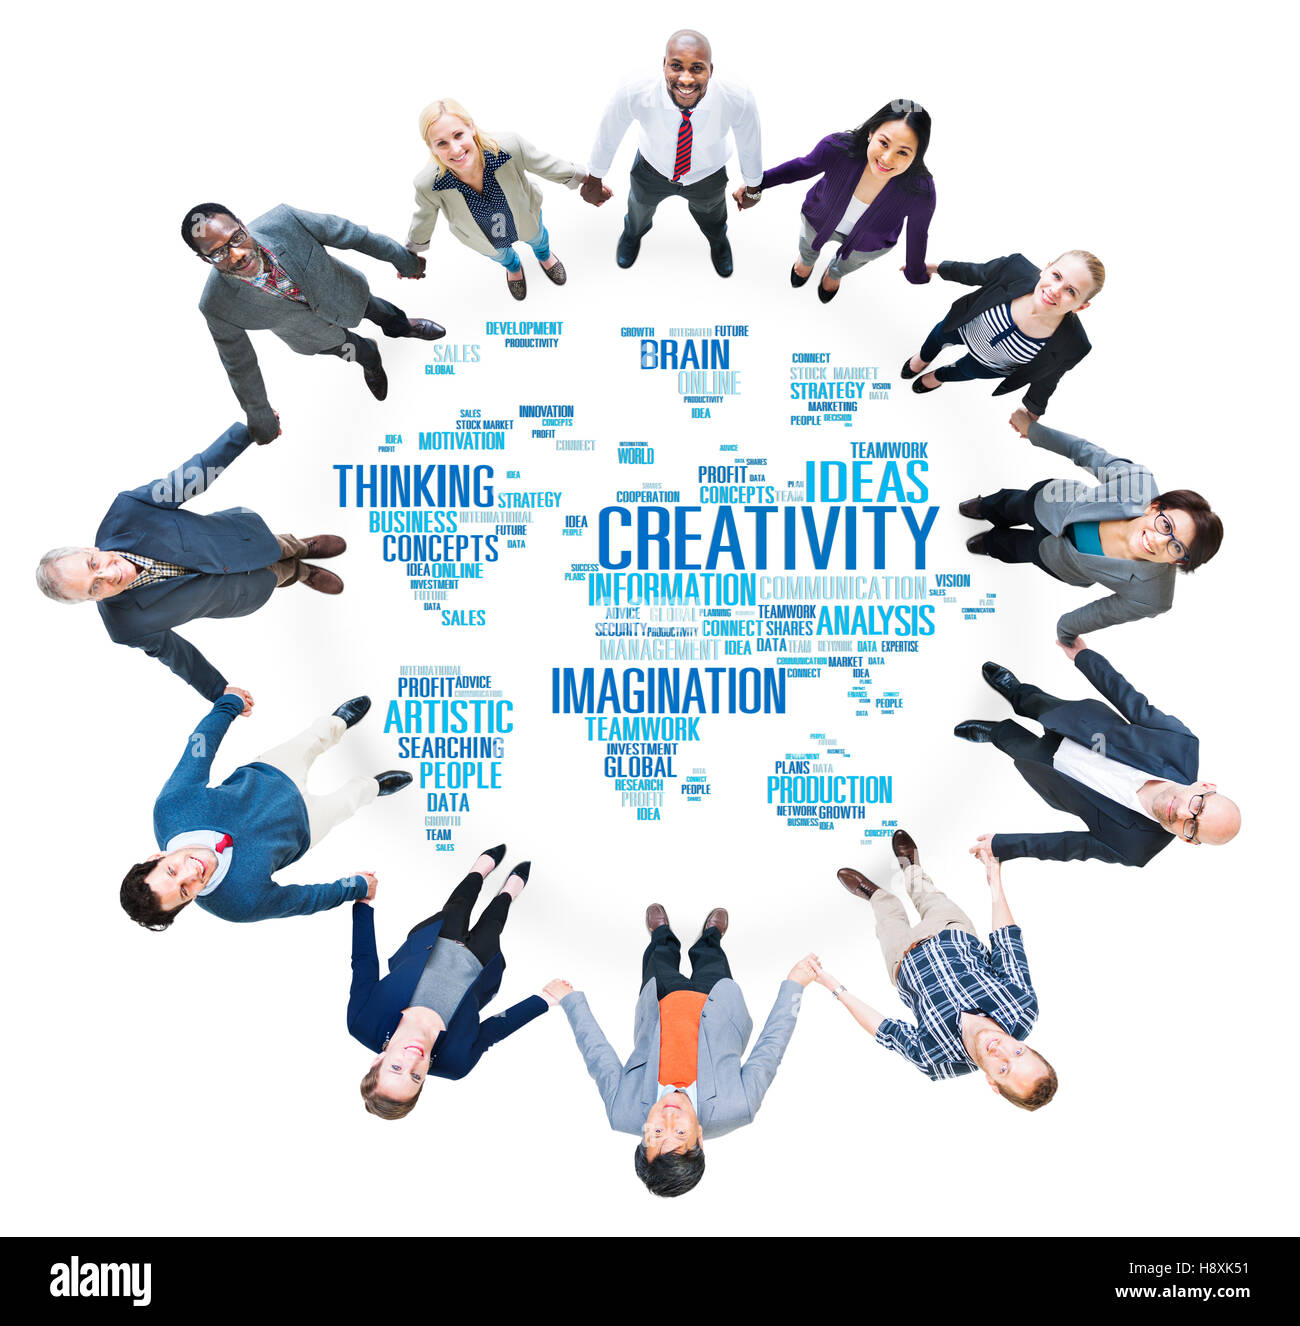 Creativity Artistic Imagination Inspiration Innovation Concept Stock Photo